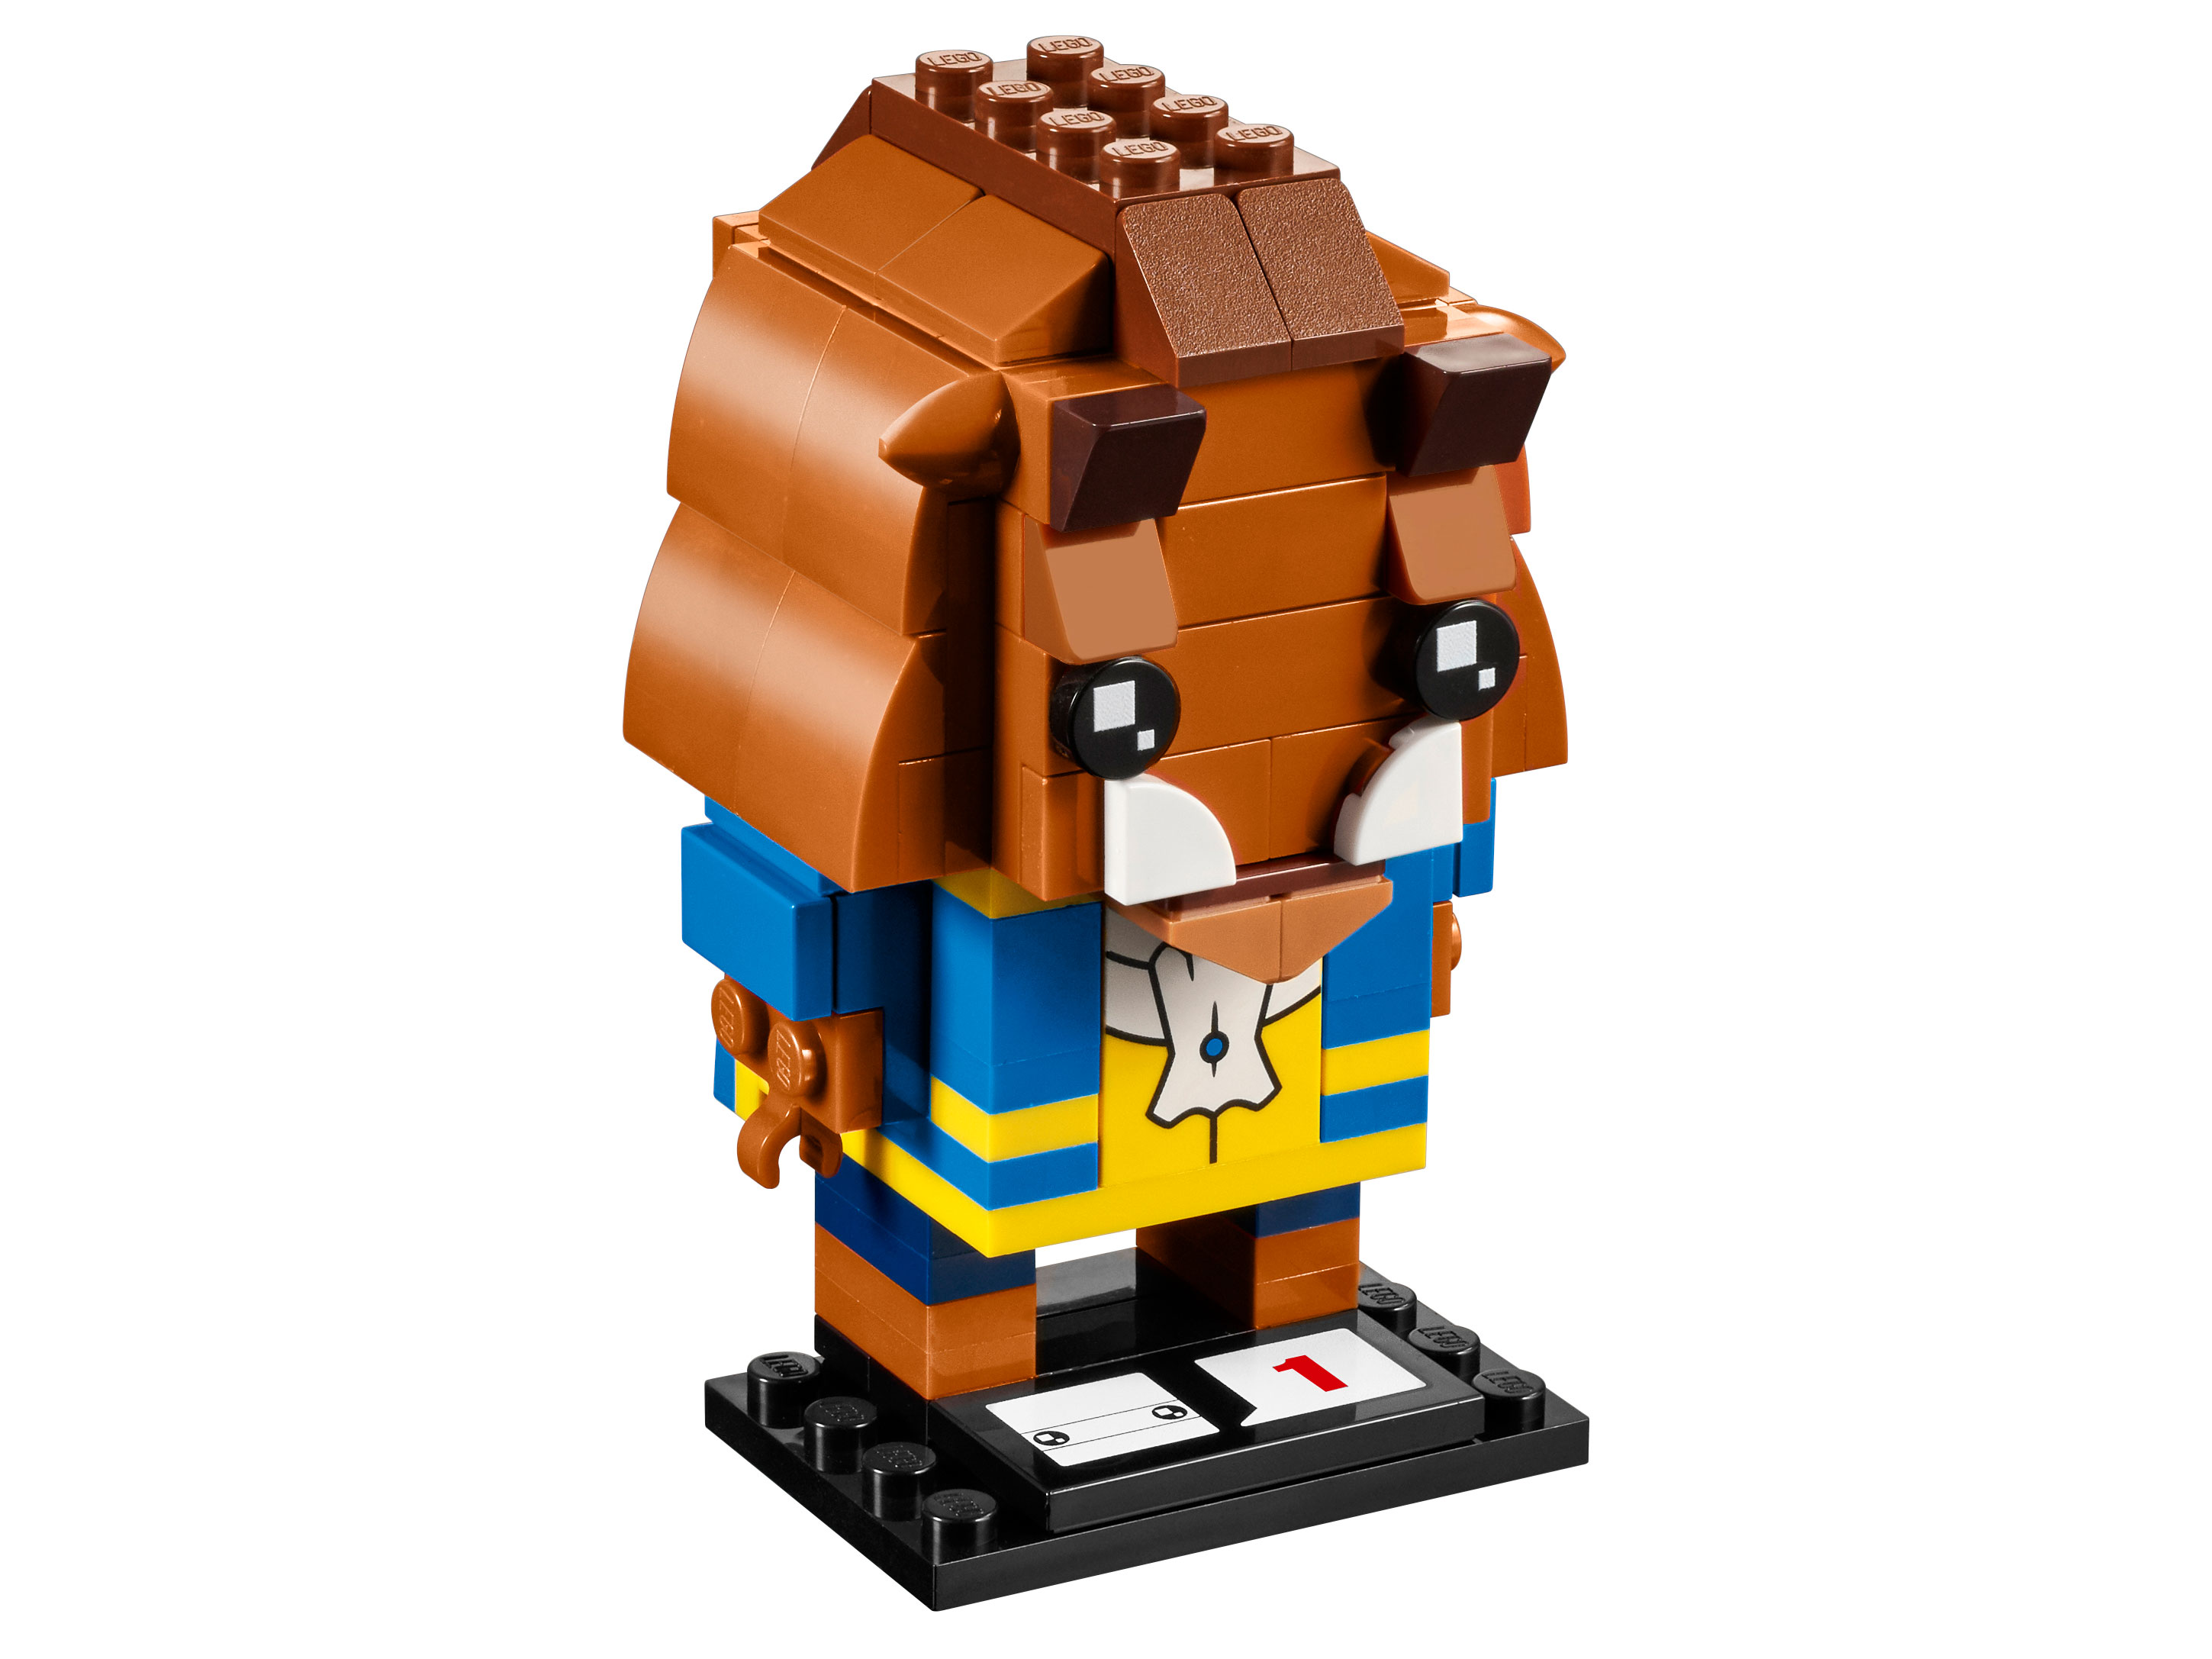 Lego BrickHeadz 41596 Чудовище